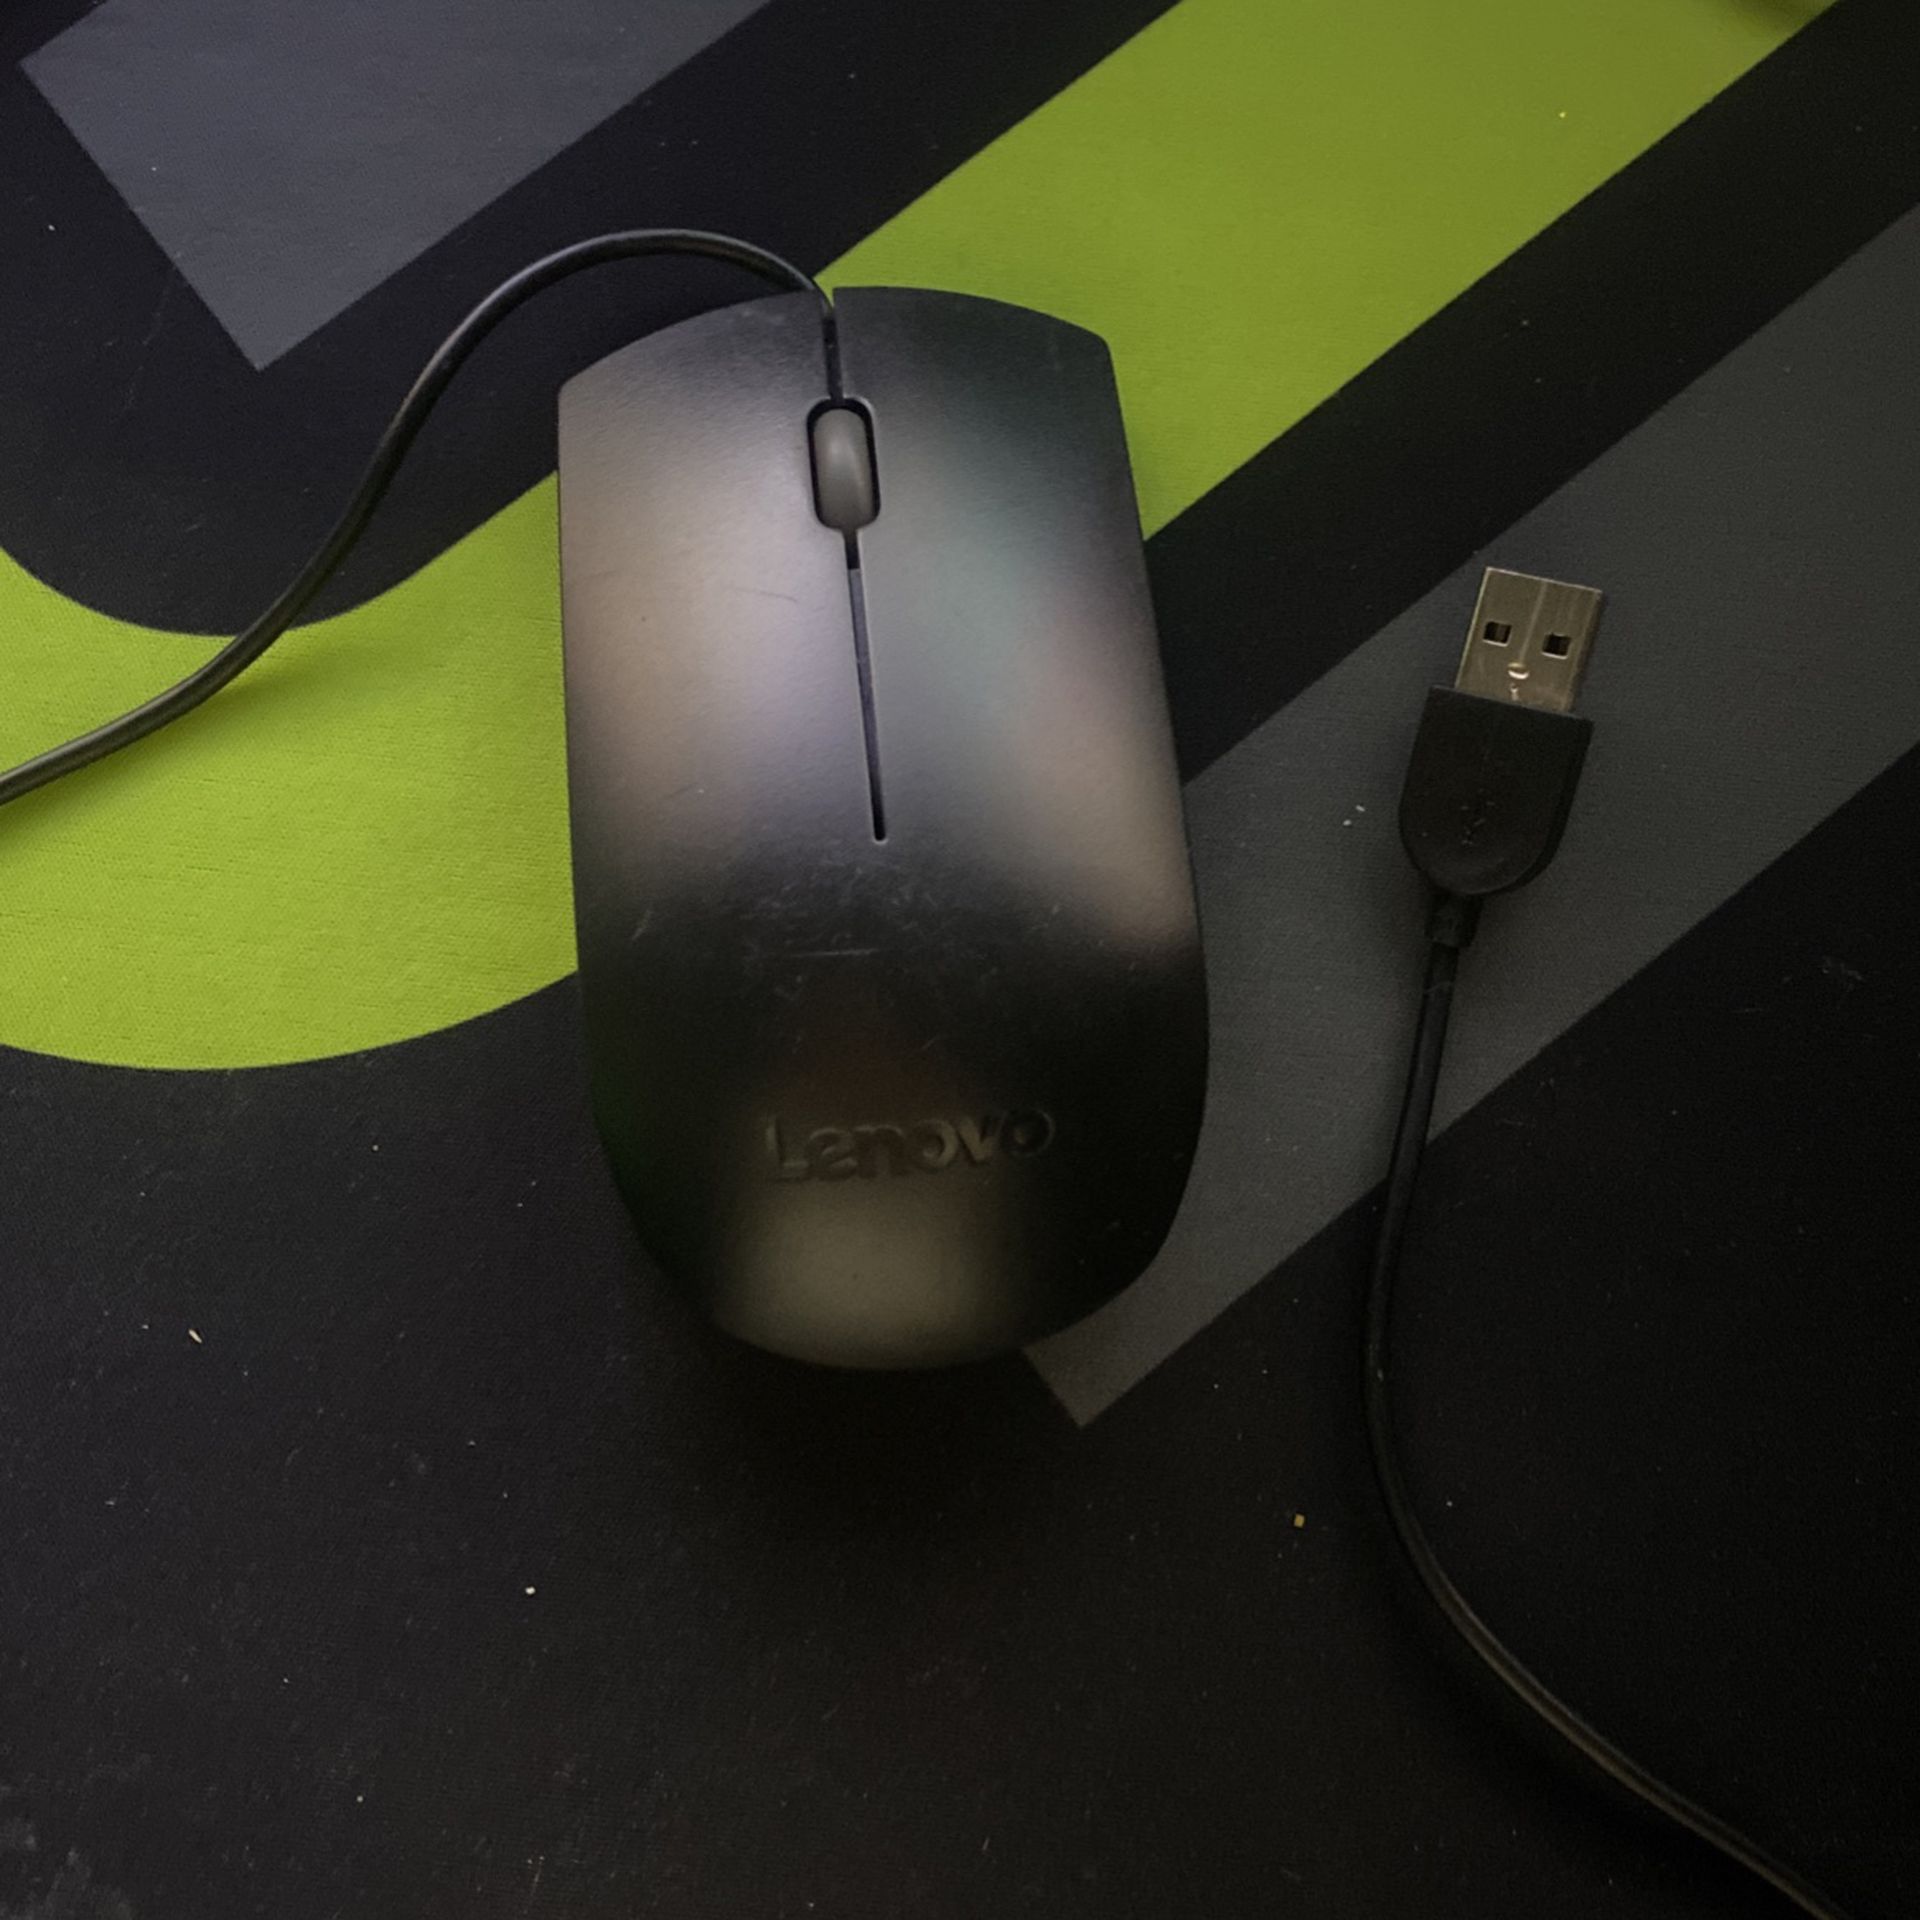 Lenovo Black Office Mouse